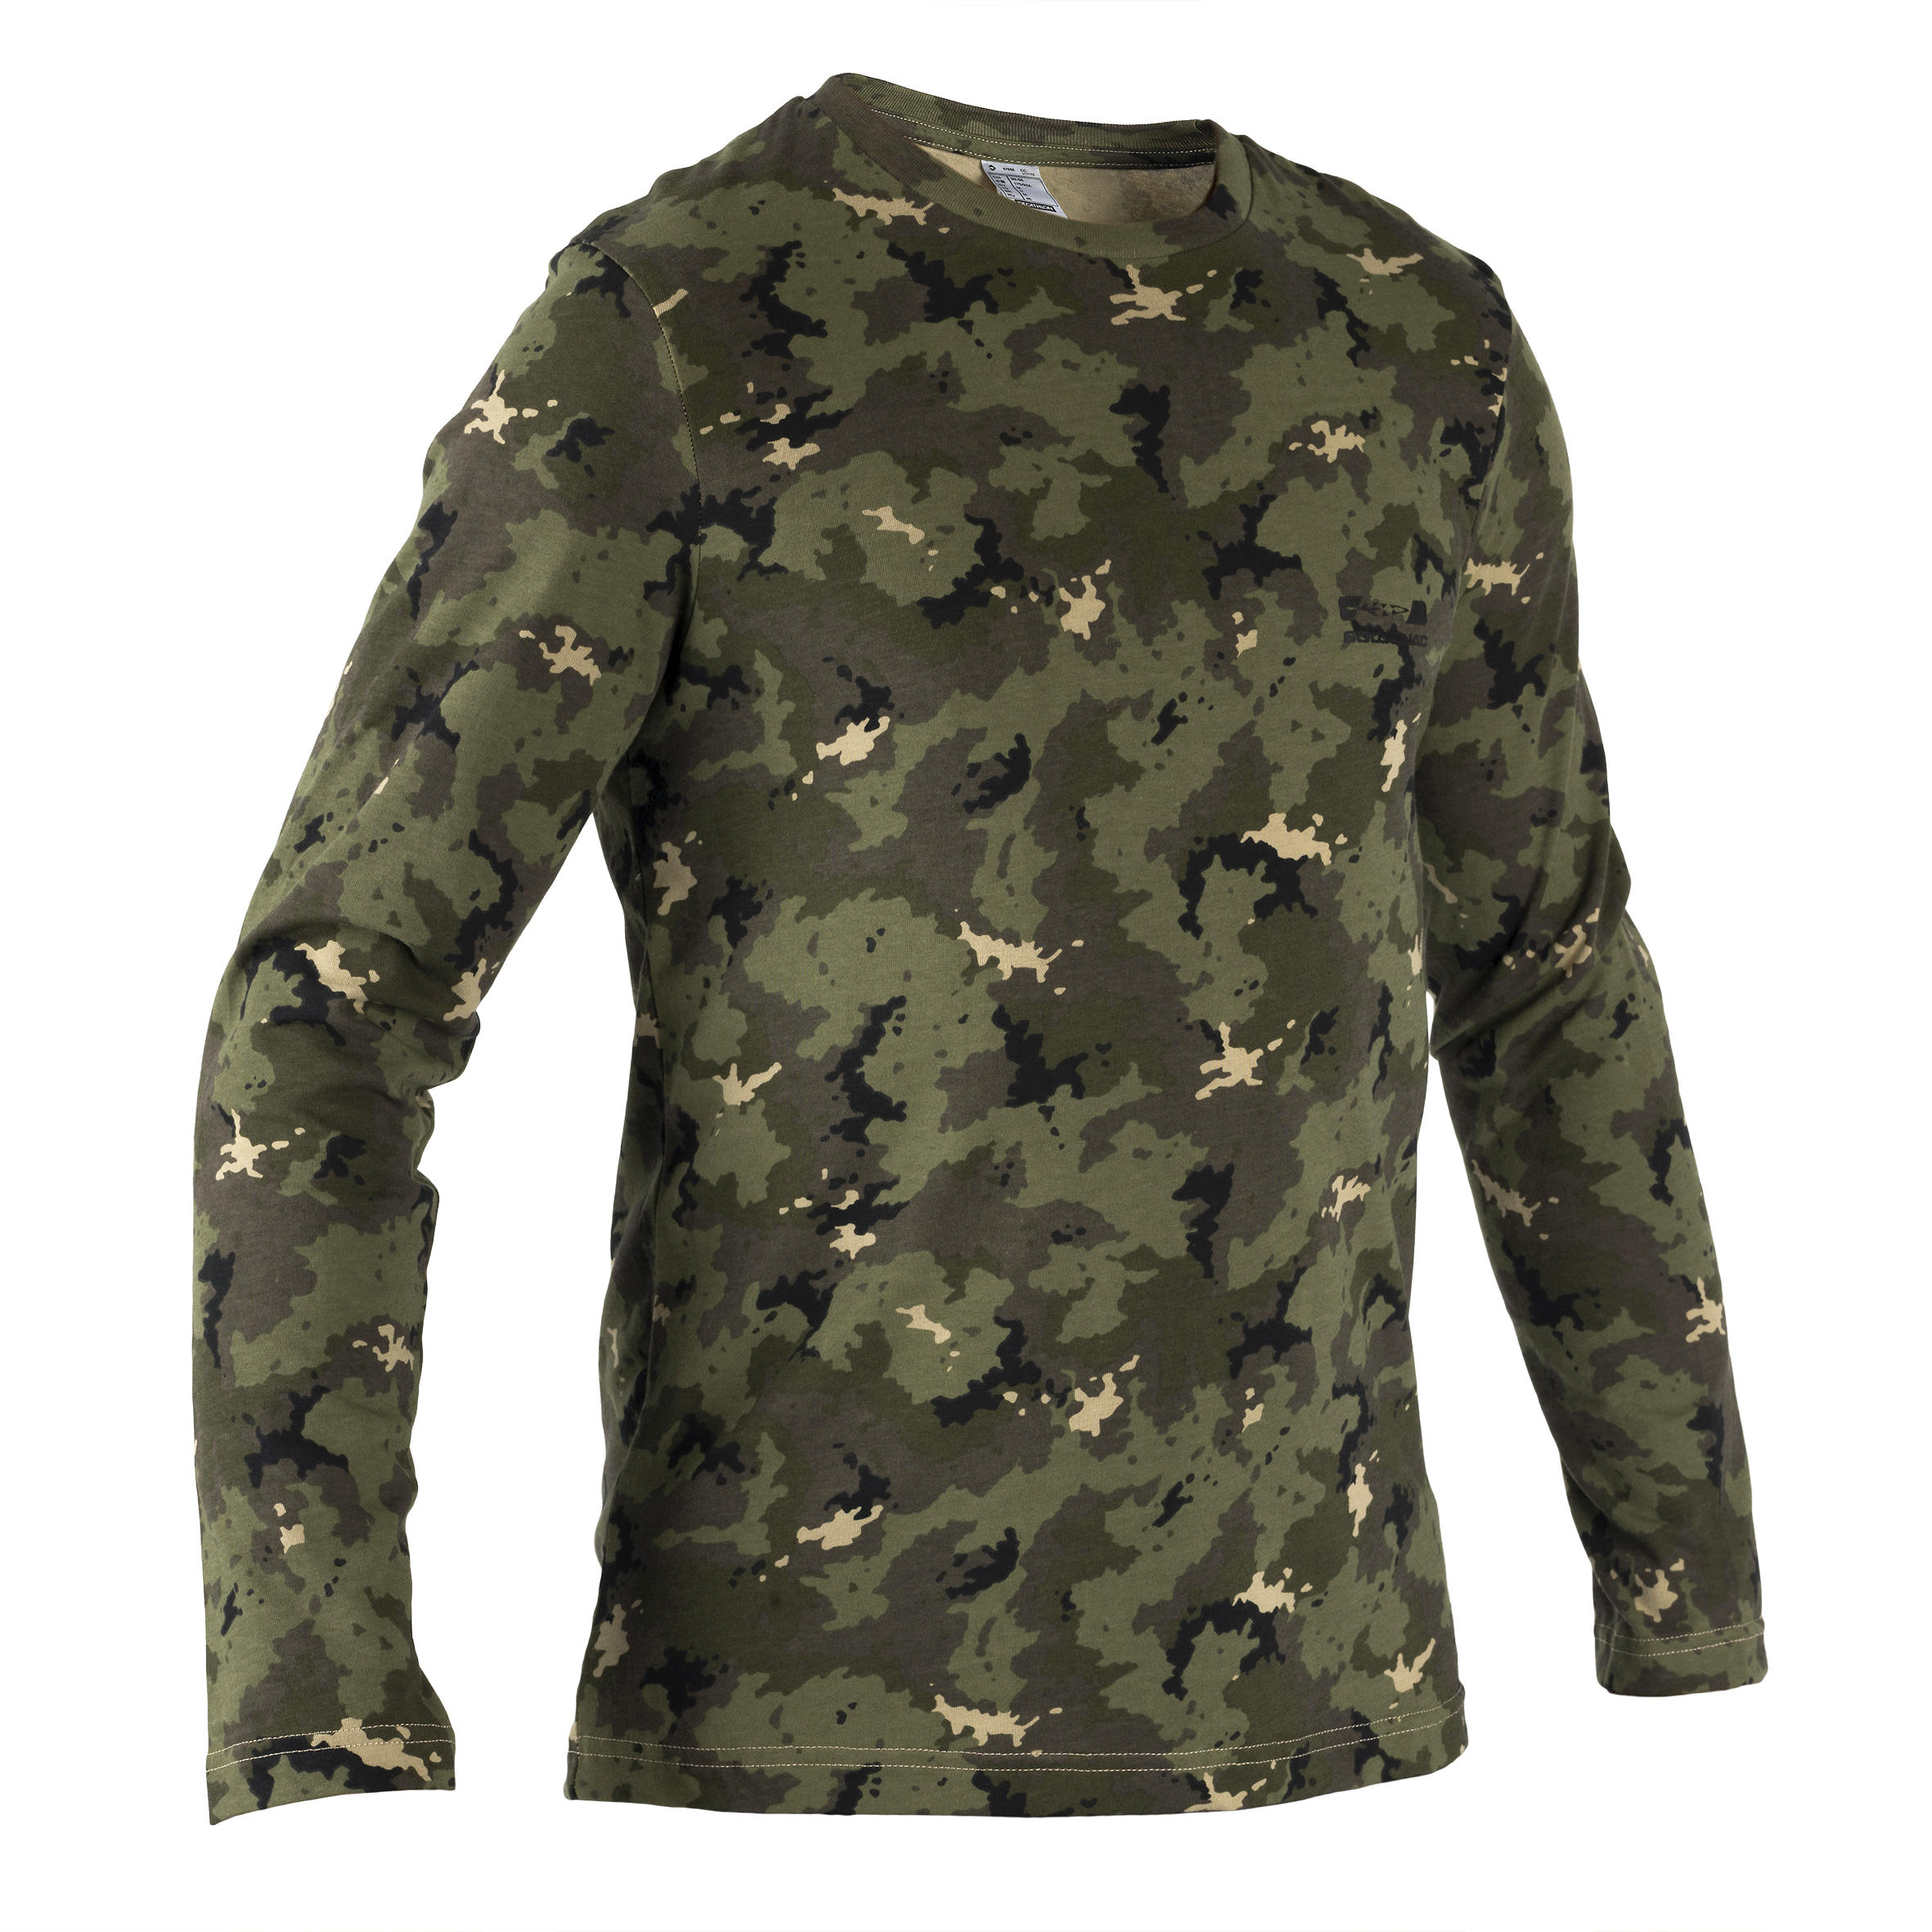 decathlon t shirt camouflage